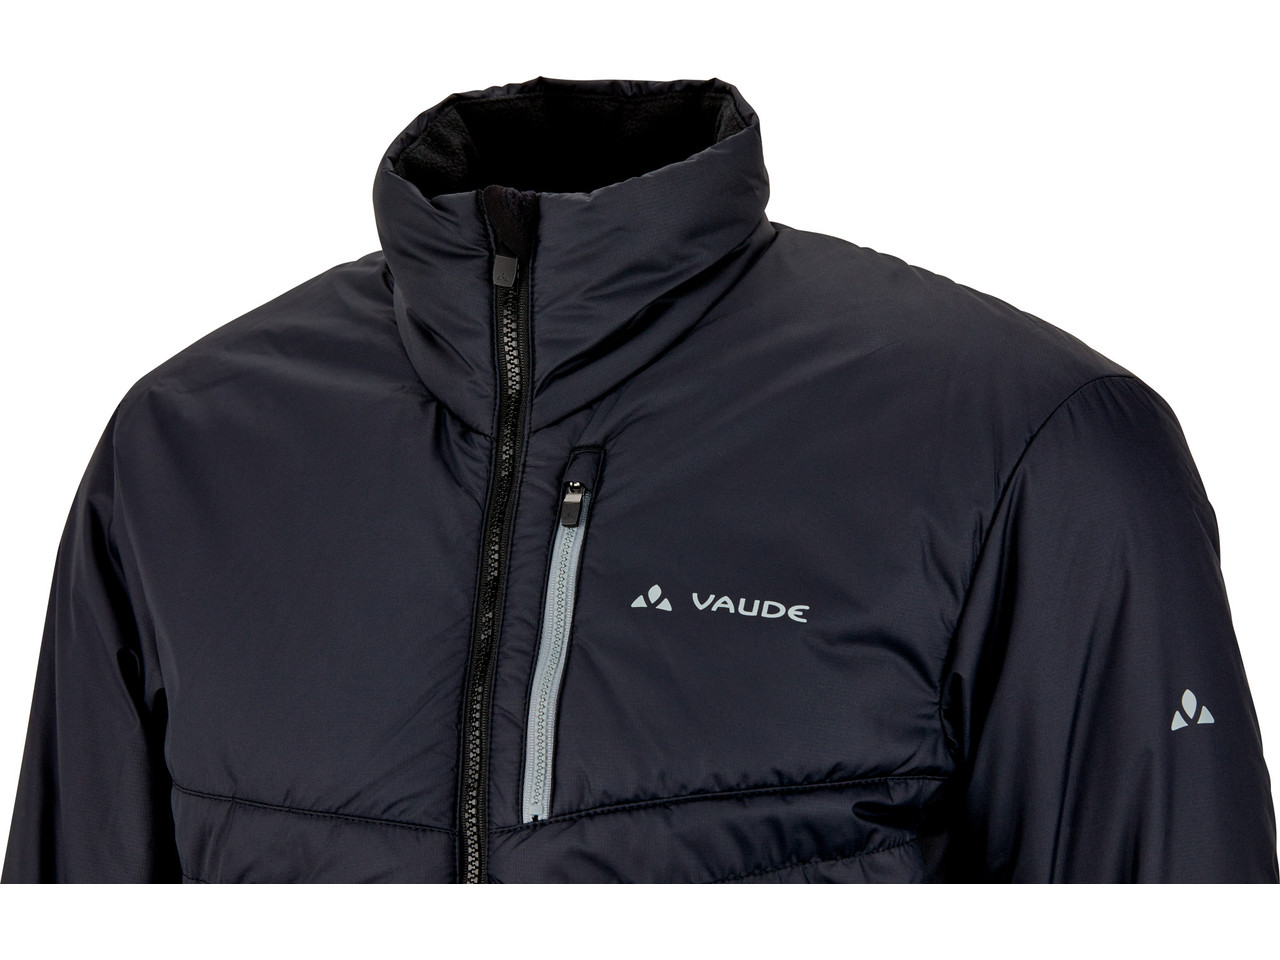 Spotlijster Staren Beheren Hot Sale VAUDE Men's Posta Insulation Jacket - 2022 Model new arrivals:  Jackets & Vests|Thermal Jackets | VAUDE United States